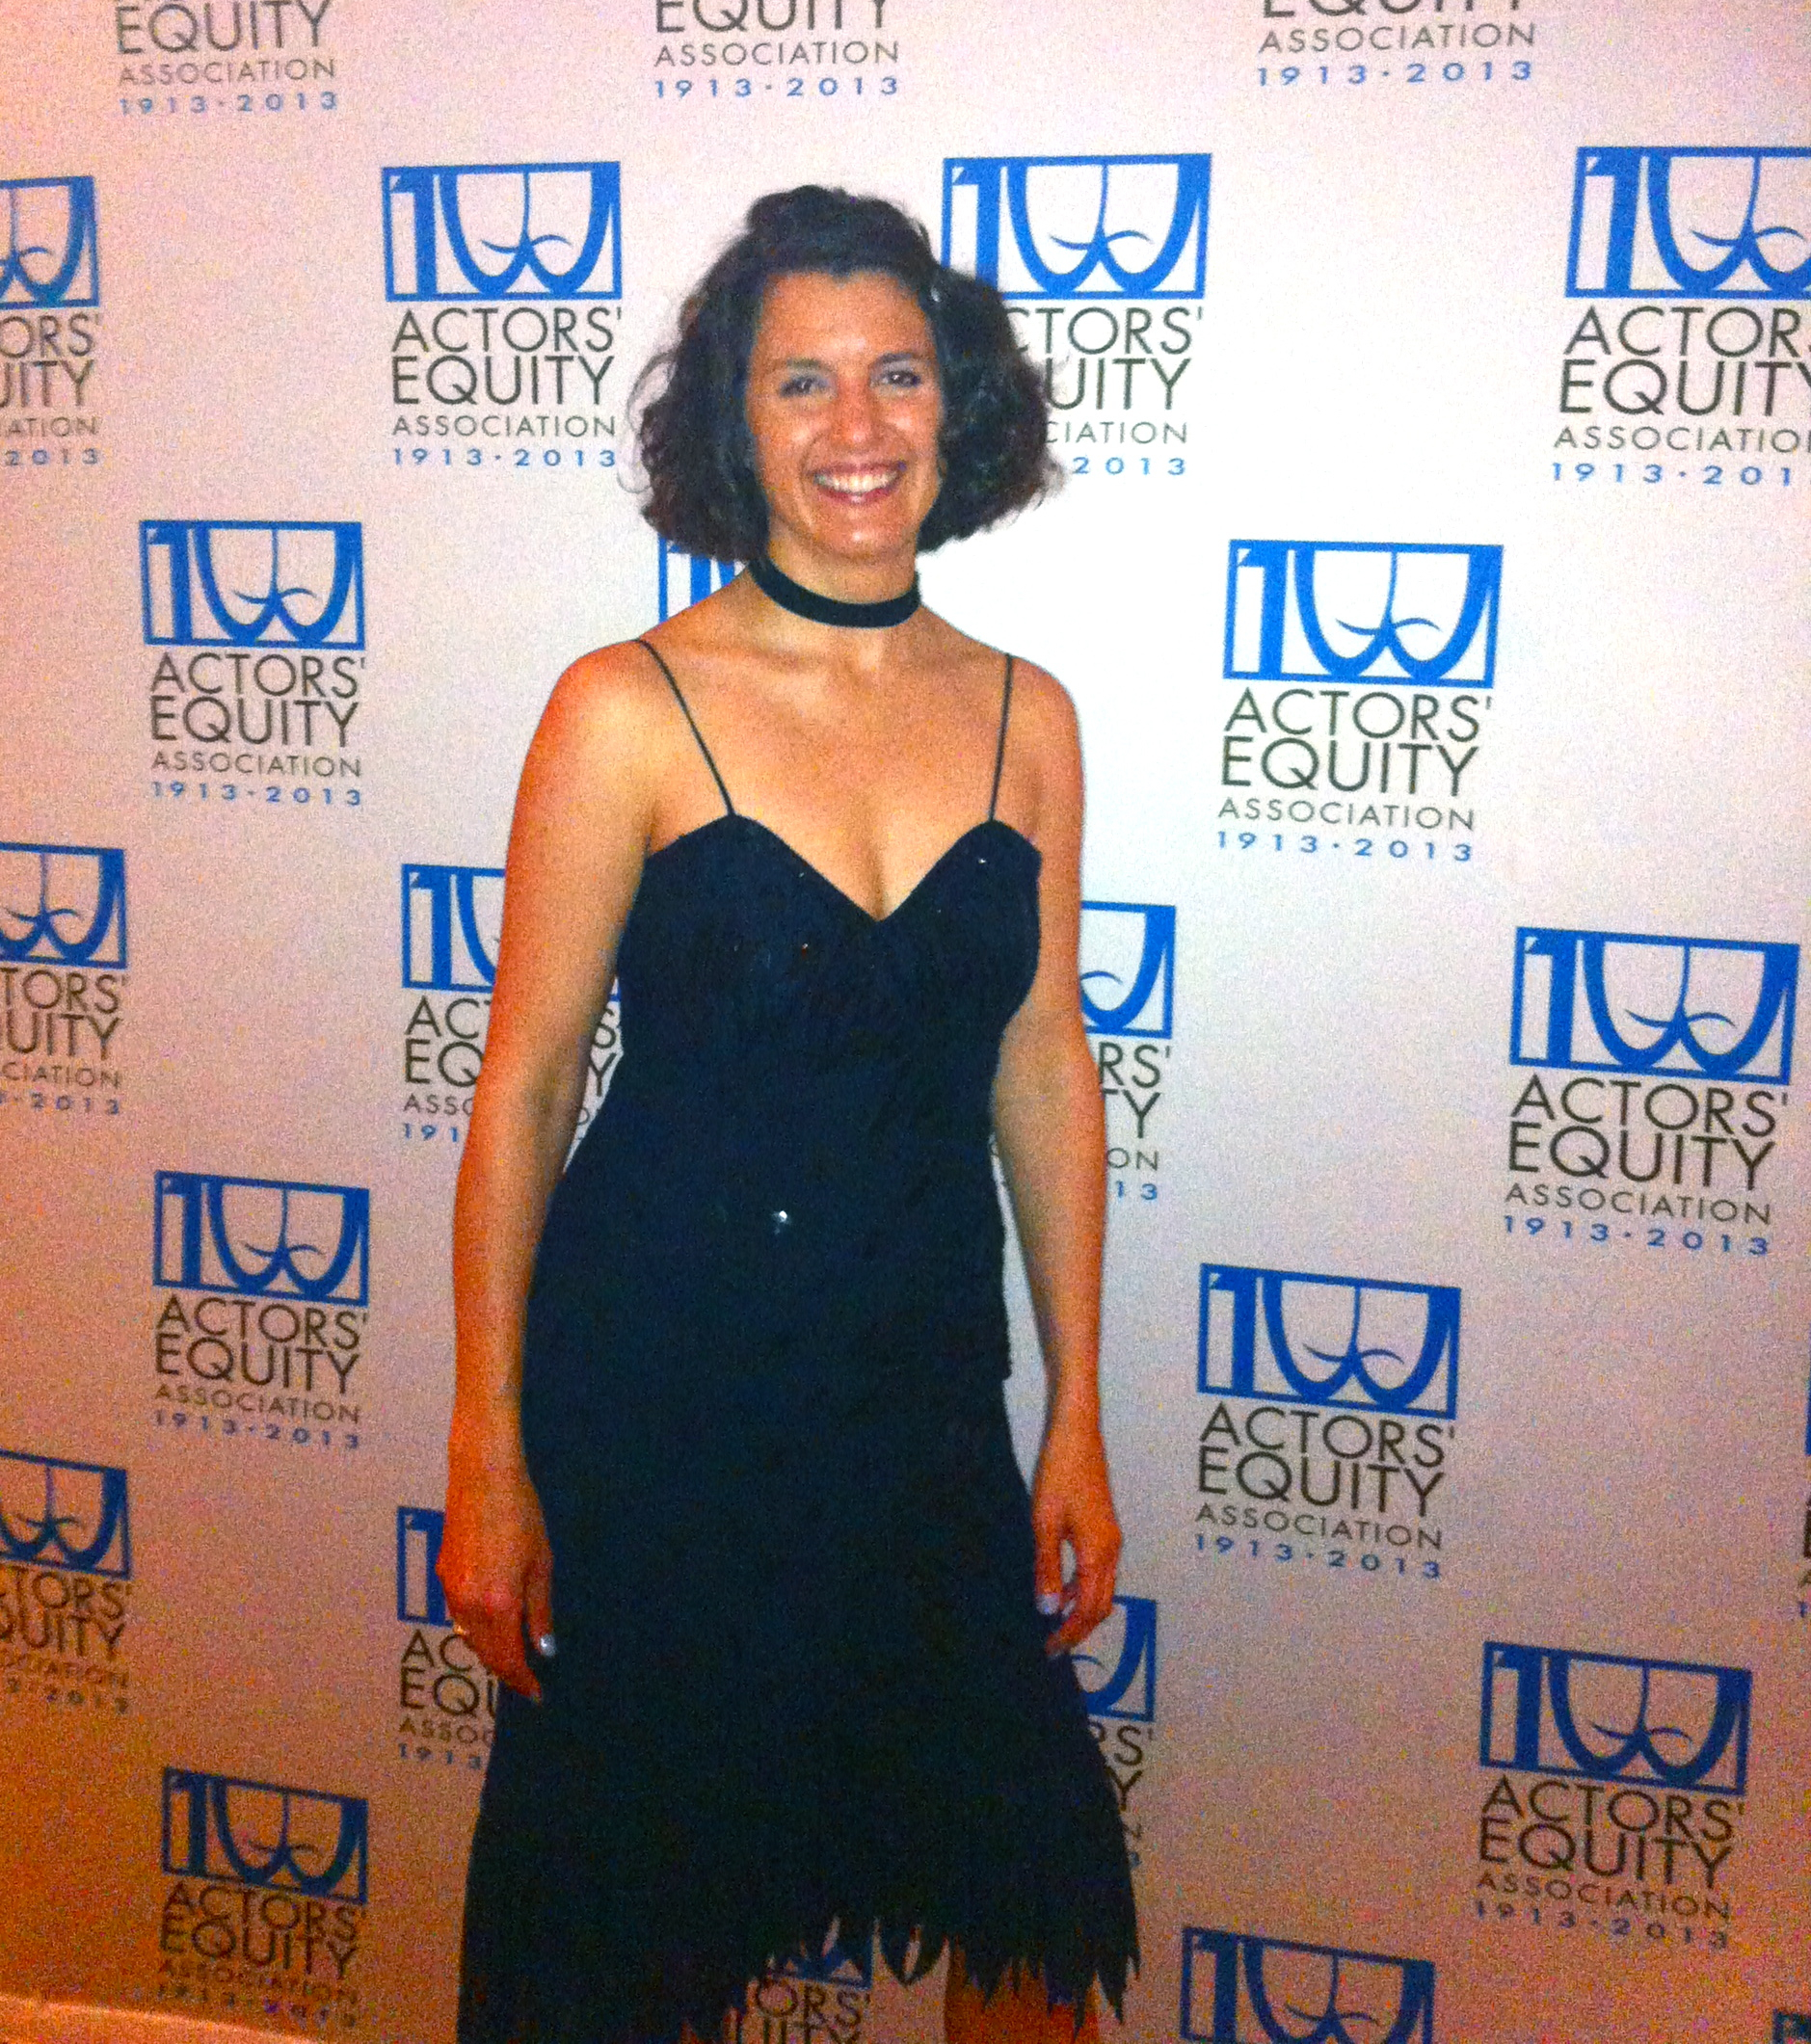 Tara Gadomski at AEA 100th anniversary gala, June 2013